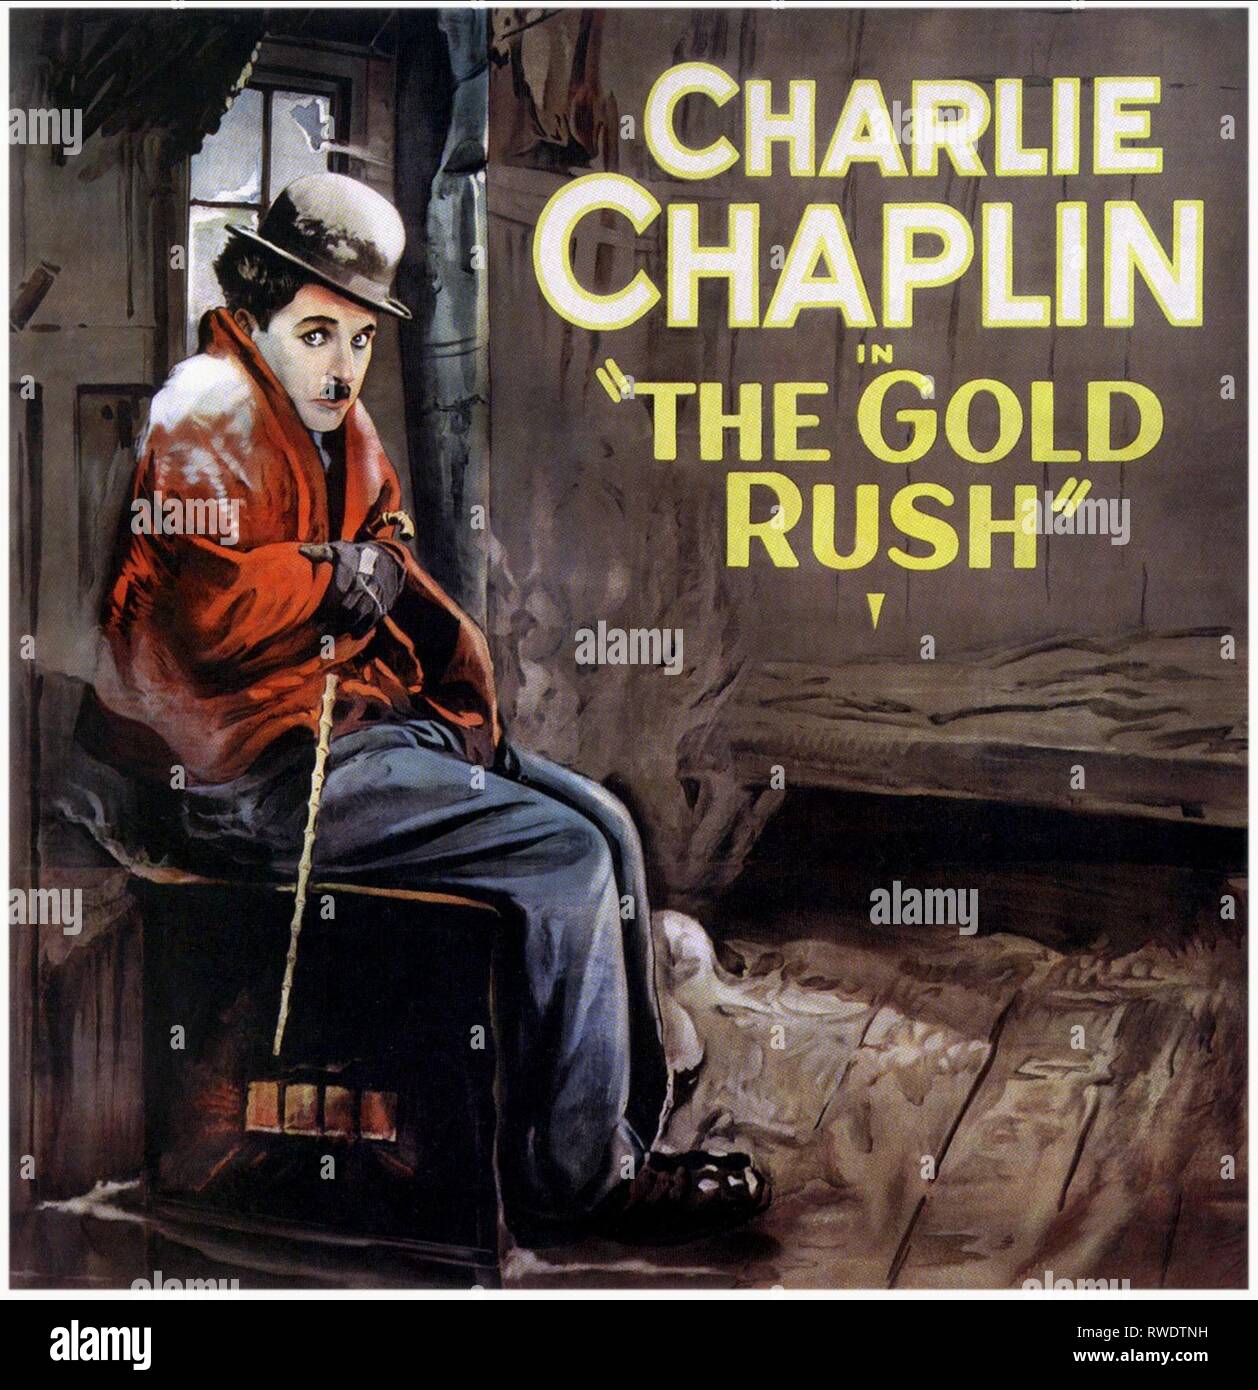 CHARLIE CHAPLIN POSTER, THE GOLD RUSH, 1925 Stock Photo